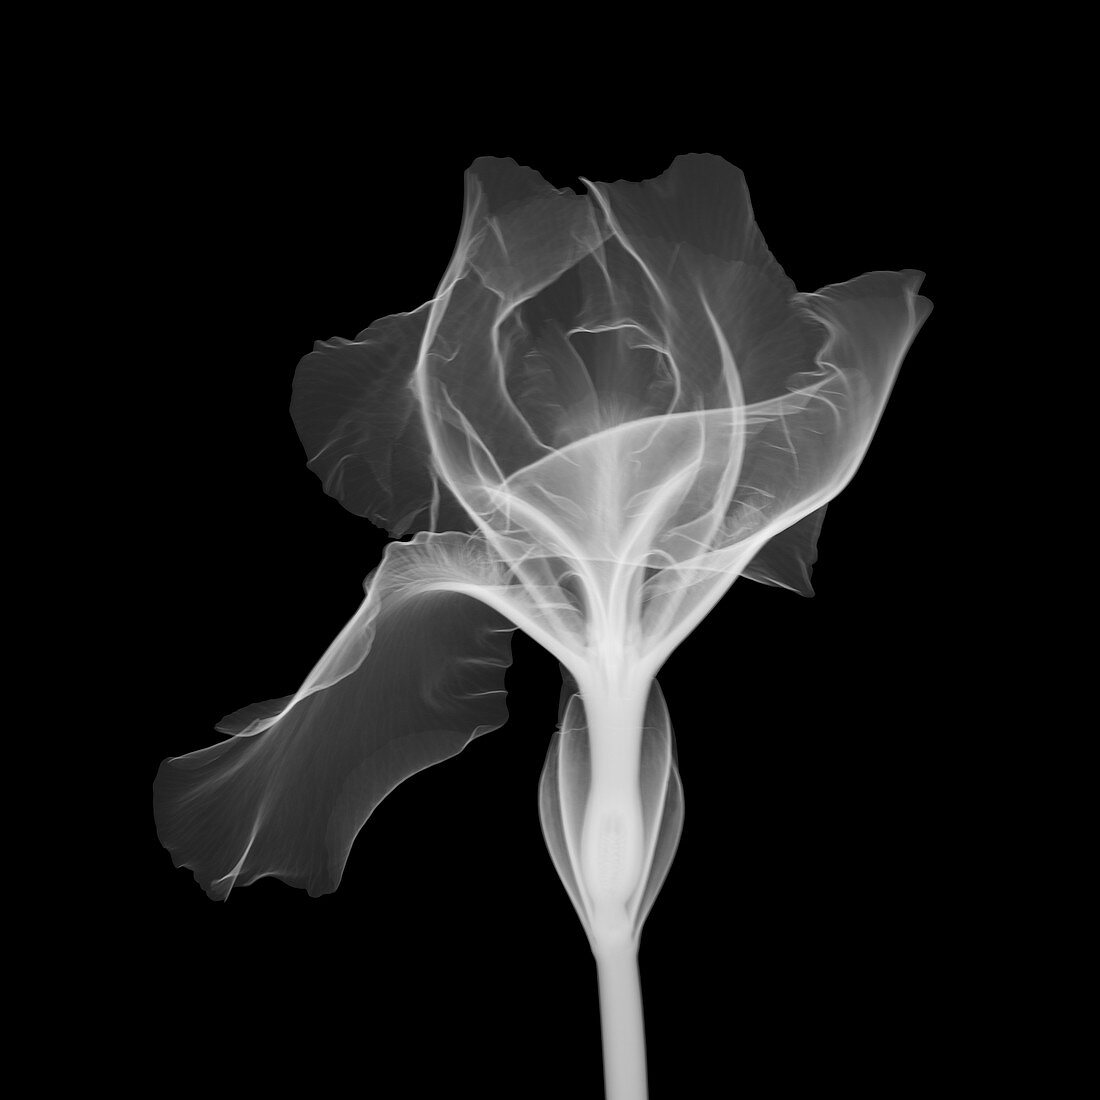 Bearded Iris 'Dutch Chocolate', X-ray